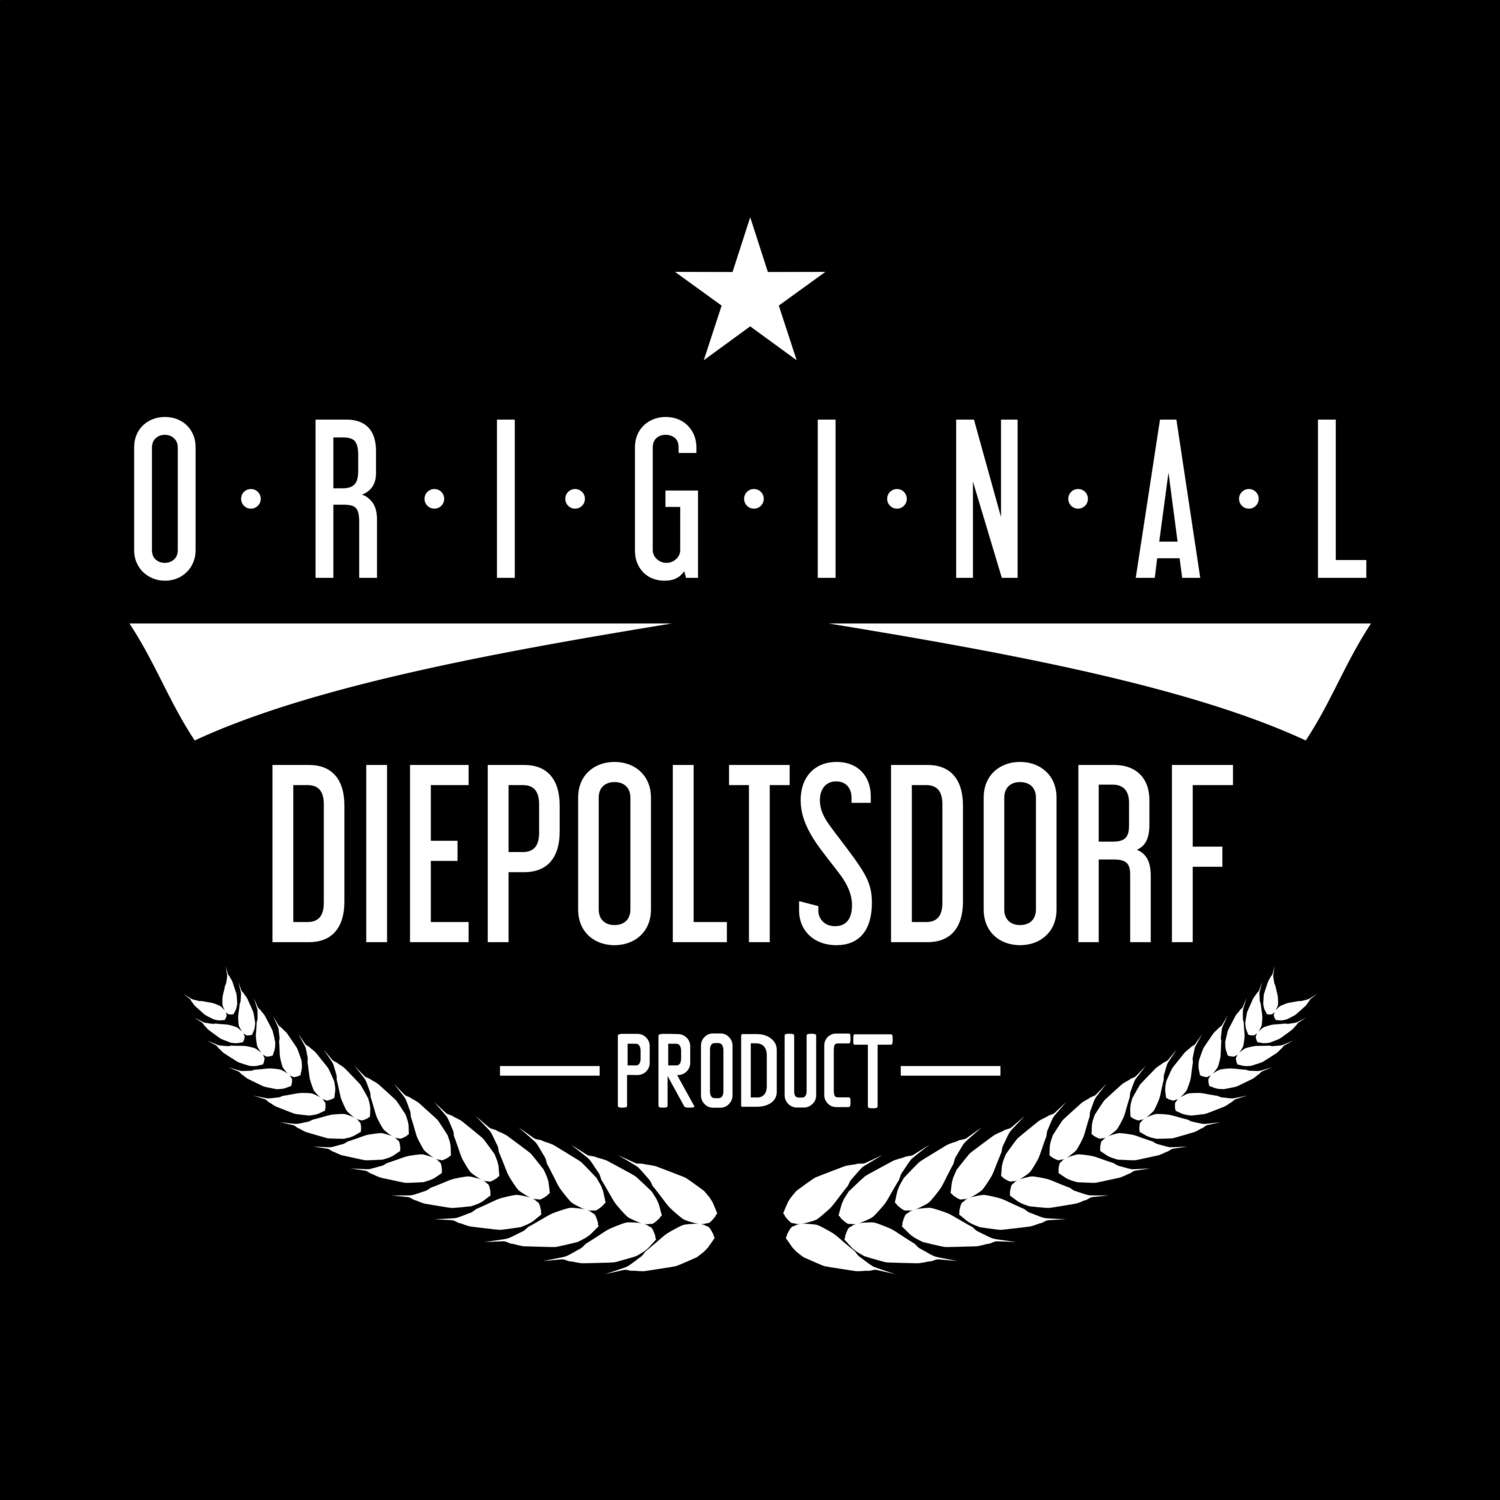 Diepoltsdorf T-Shirt »Original Product«